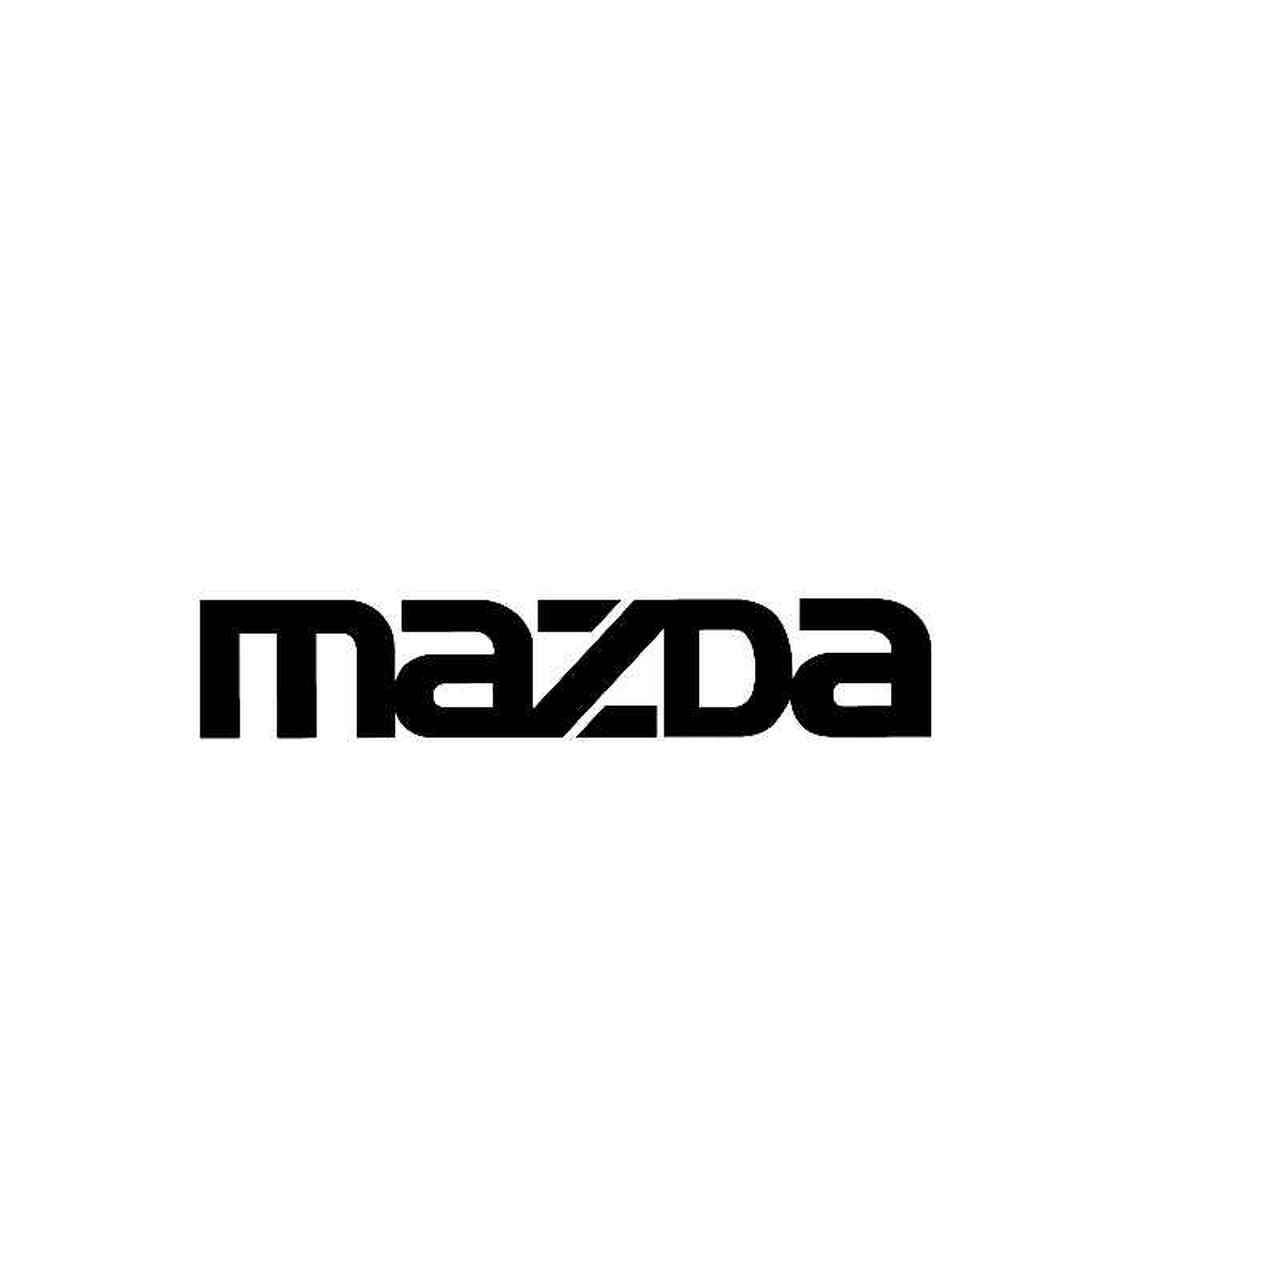 Madza Logo - Mazda Logo Jdm Decal